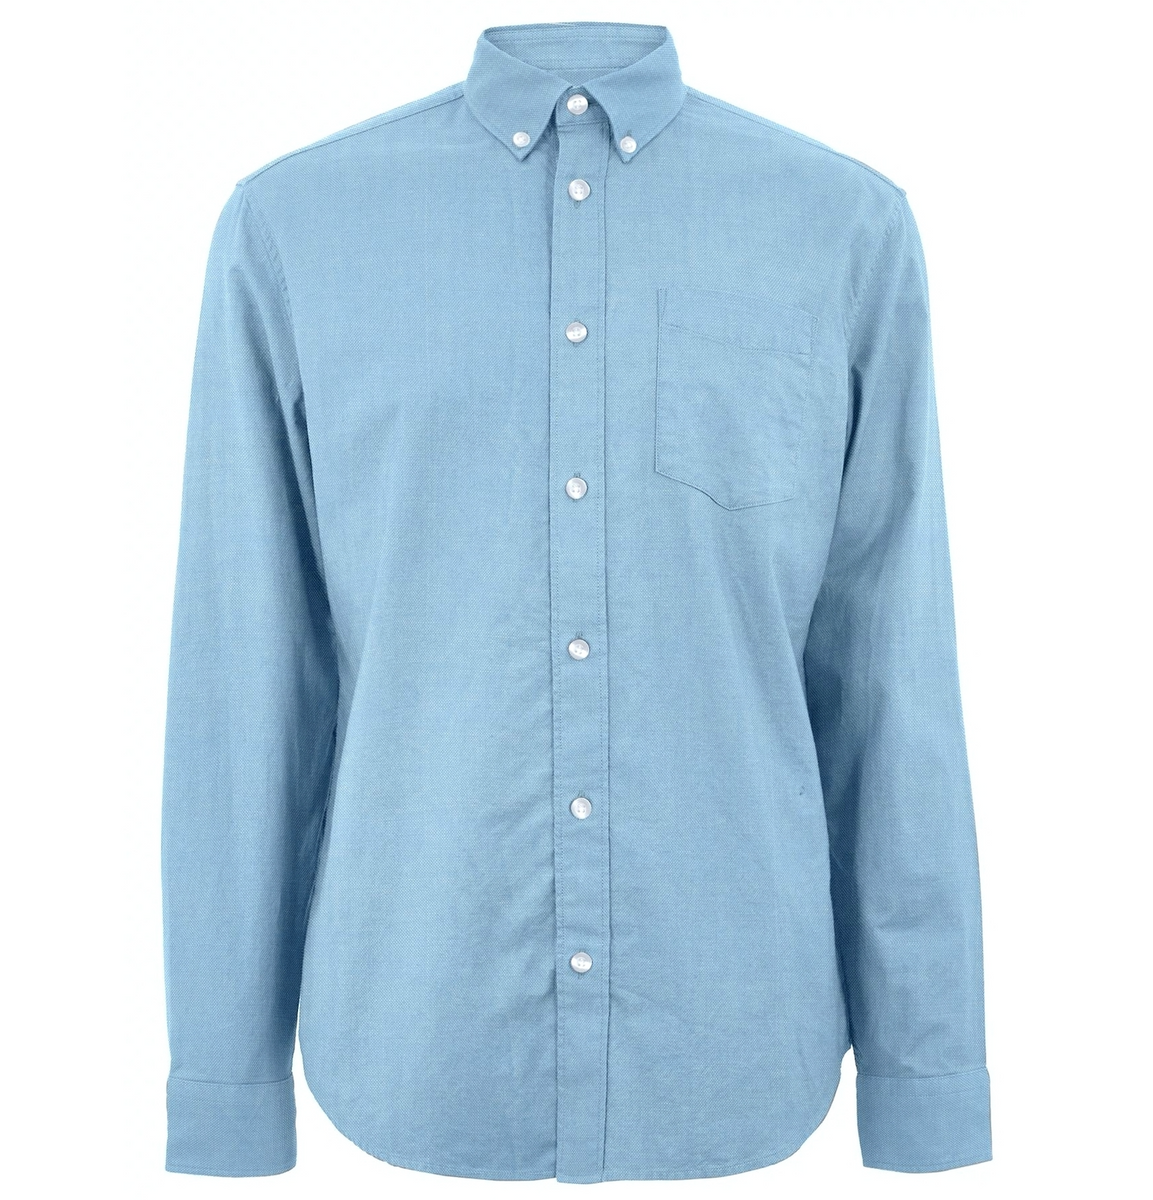 Airthreads Men's Shirt, Oxford Cotton Button Down, Long Sleeve, Sky ...